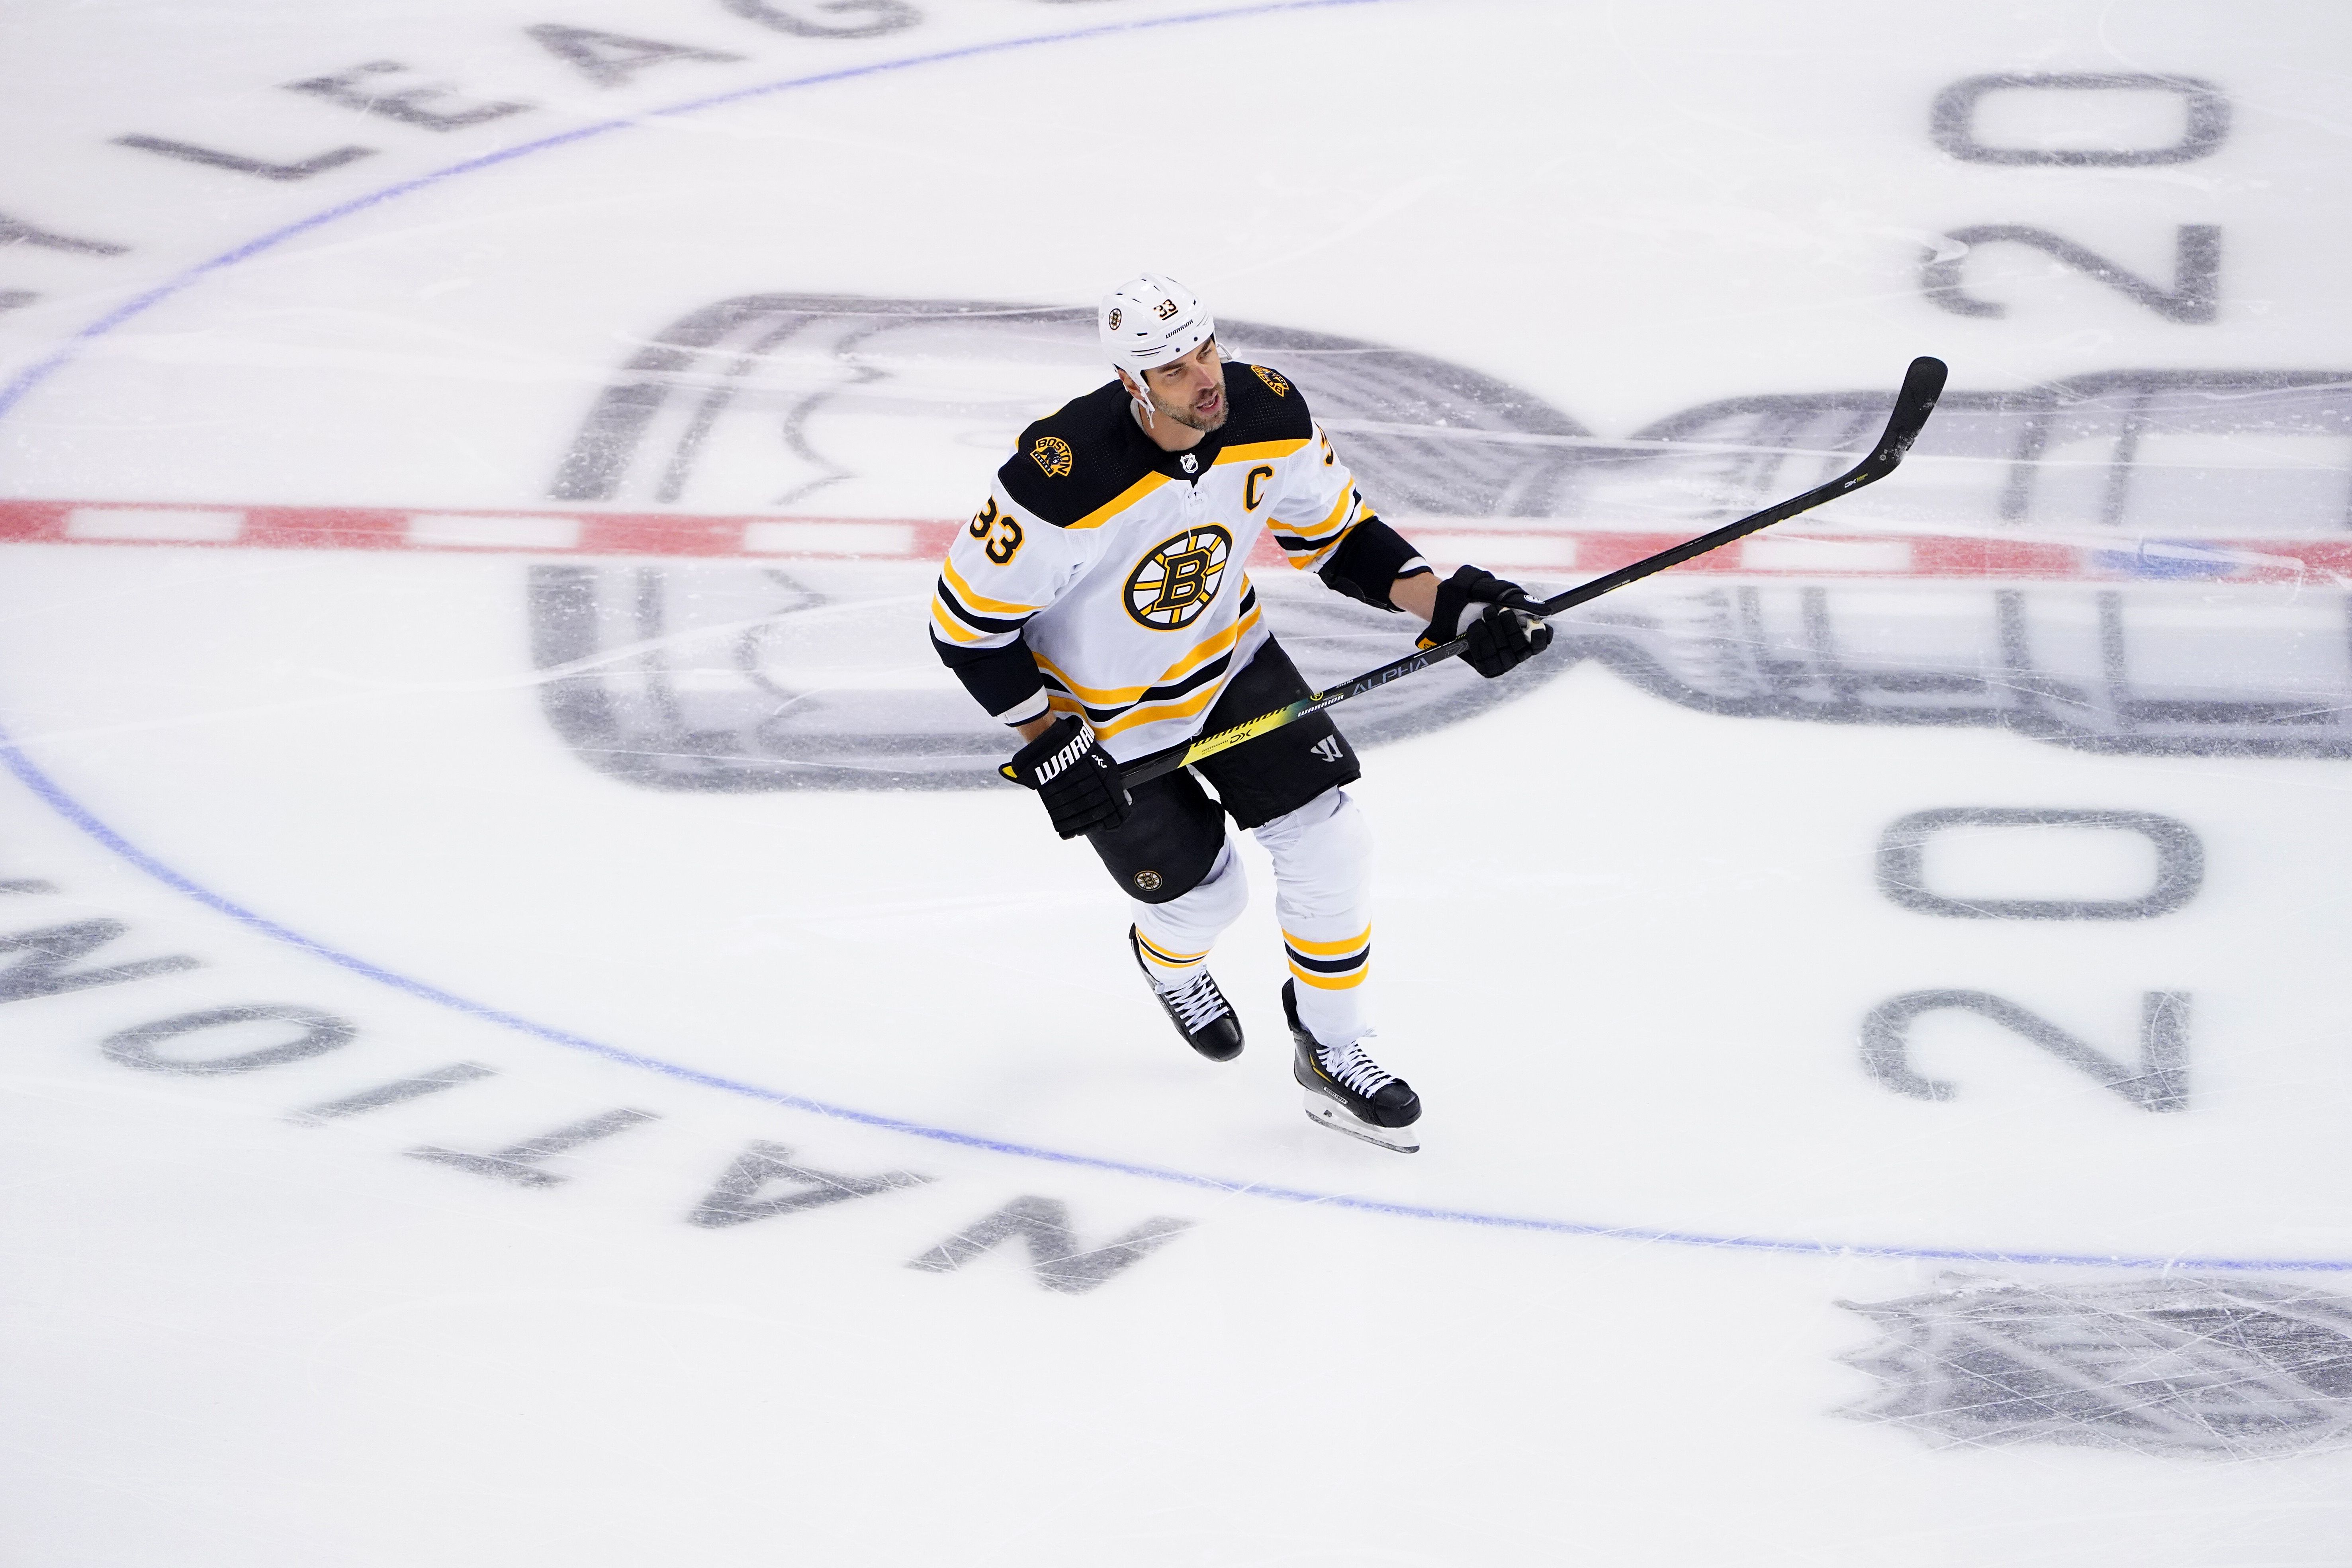 Zdeno Chara Boston Bruins Unsigned White Jersey Skating